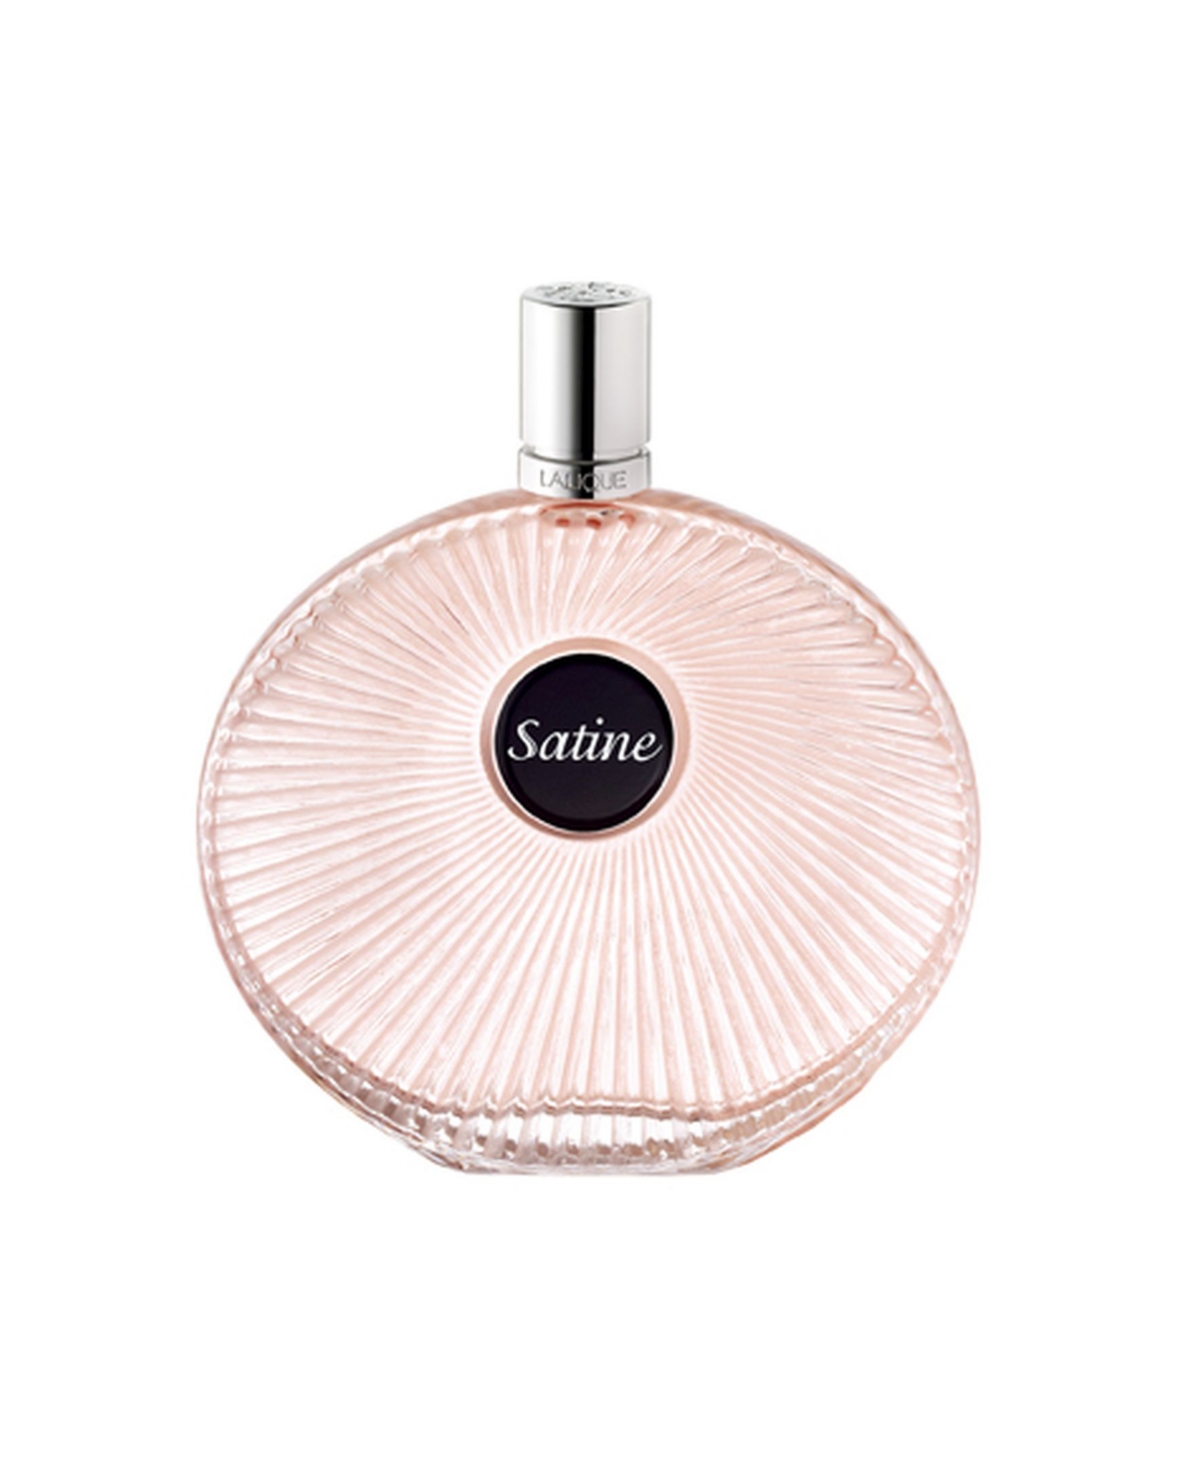 Satine Eau De Perfume, 1.69 oz./ 50 ml